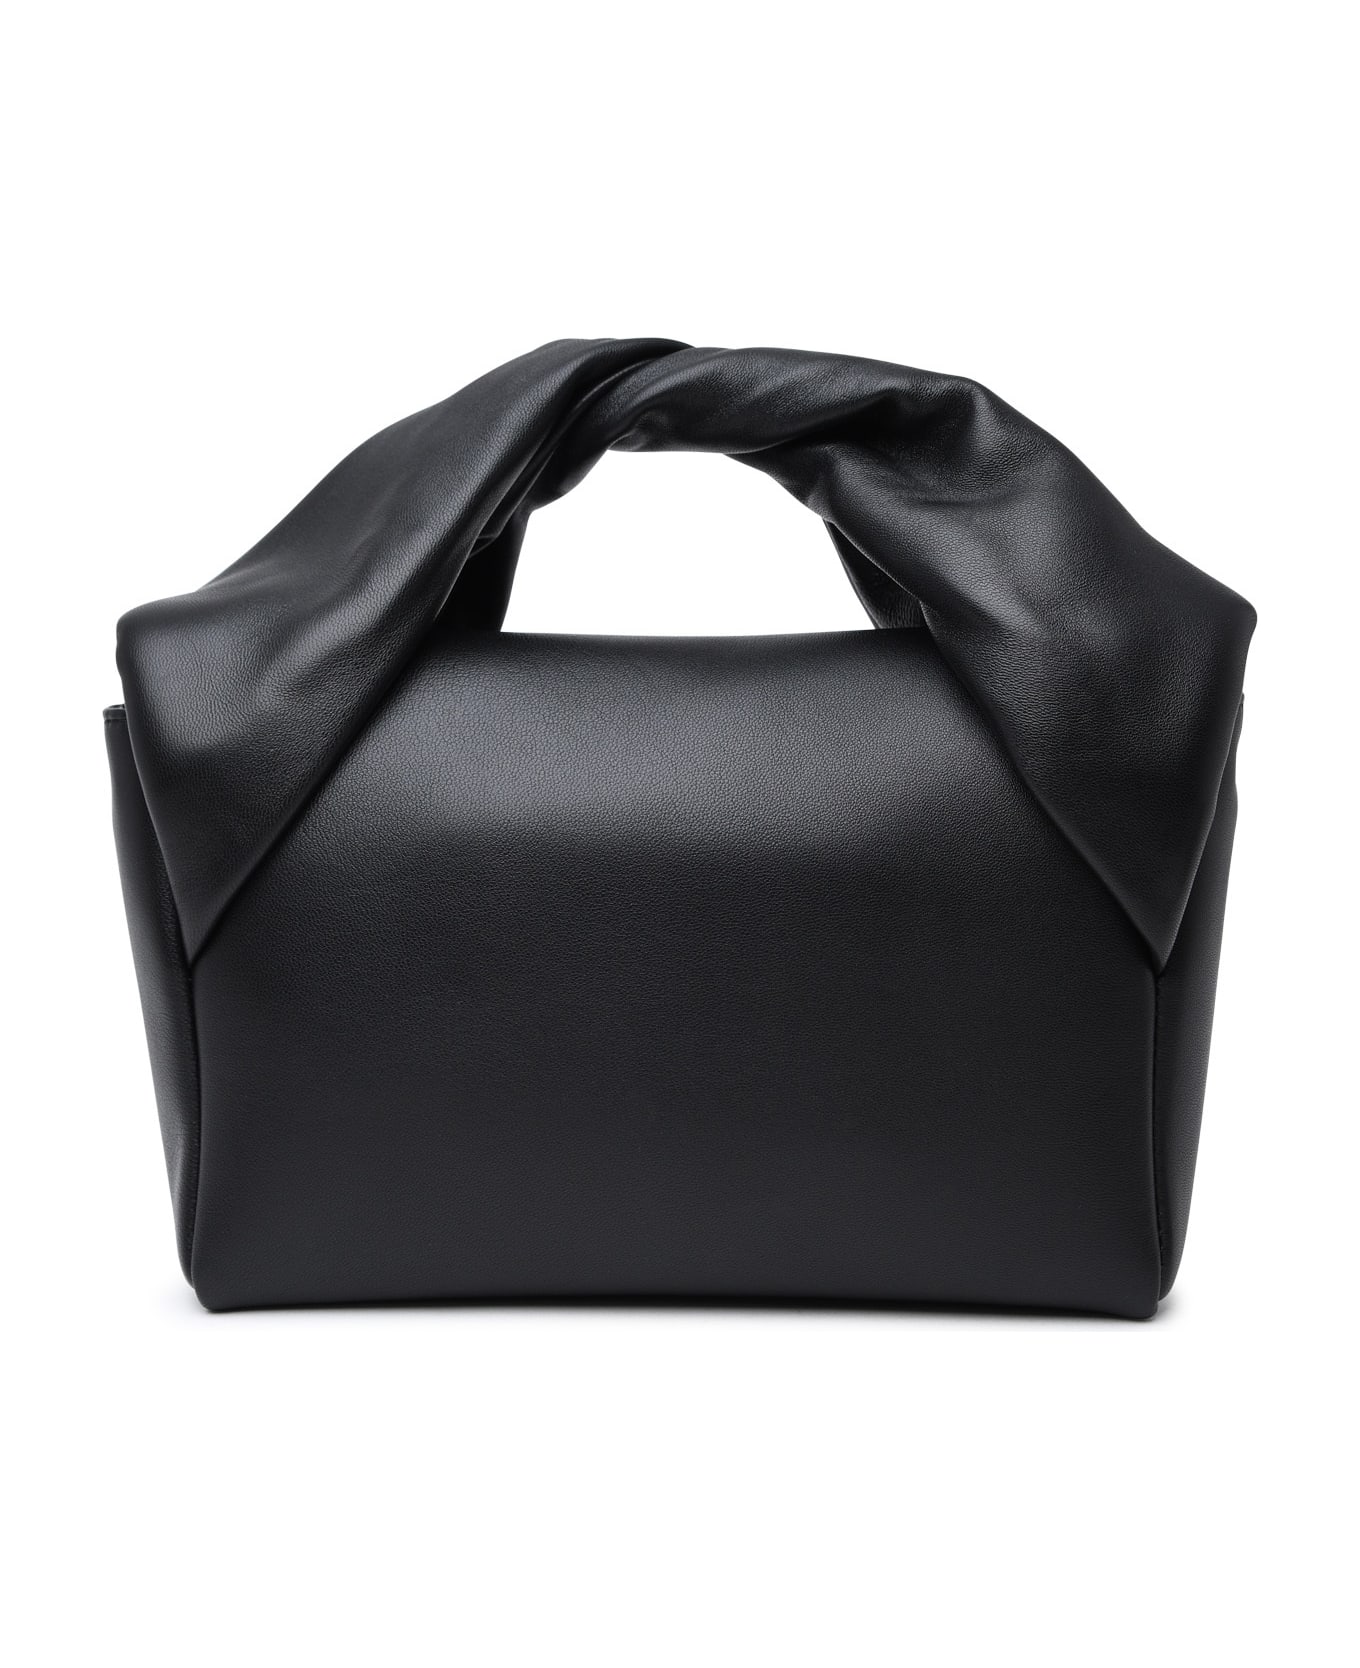 J.W. Anderson Black Leather Twister Large Bag - Black